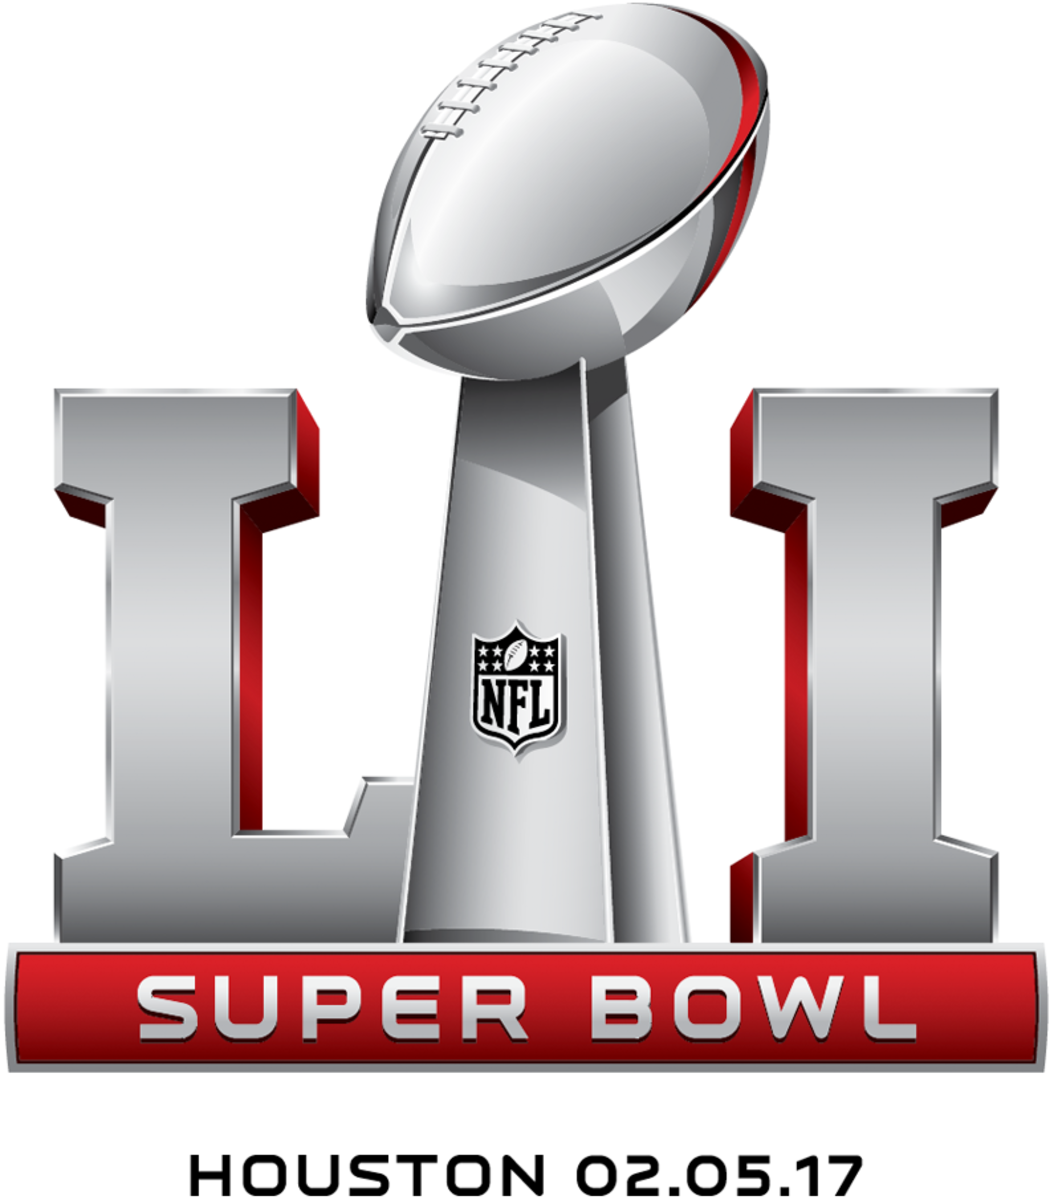 The logo for Super Bowl LI.